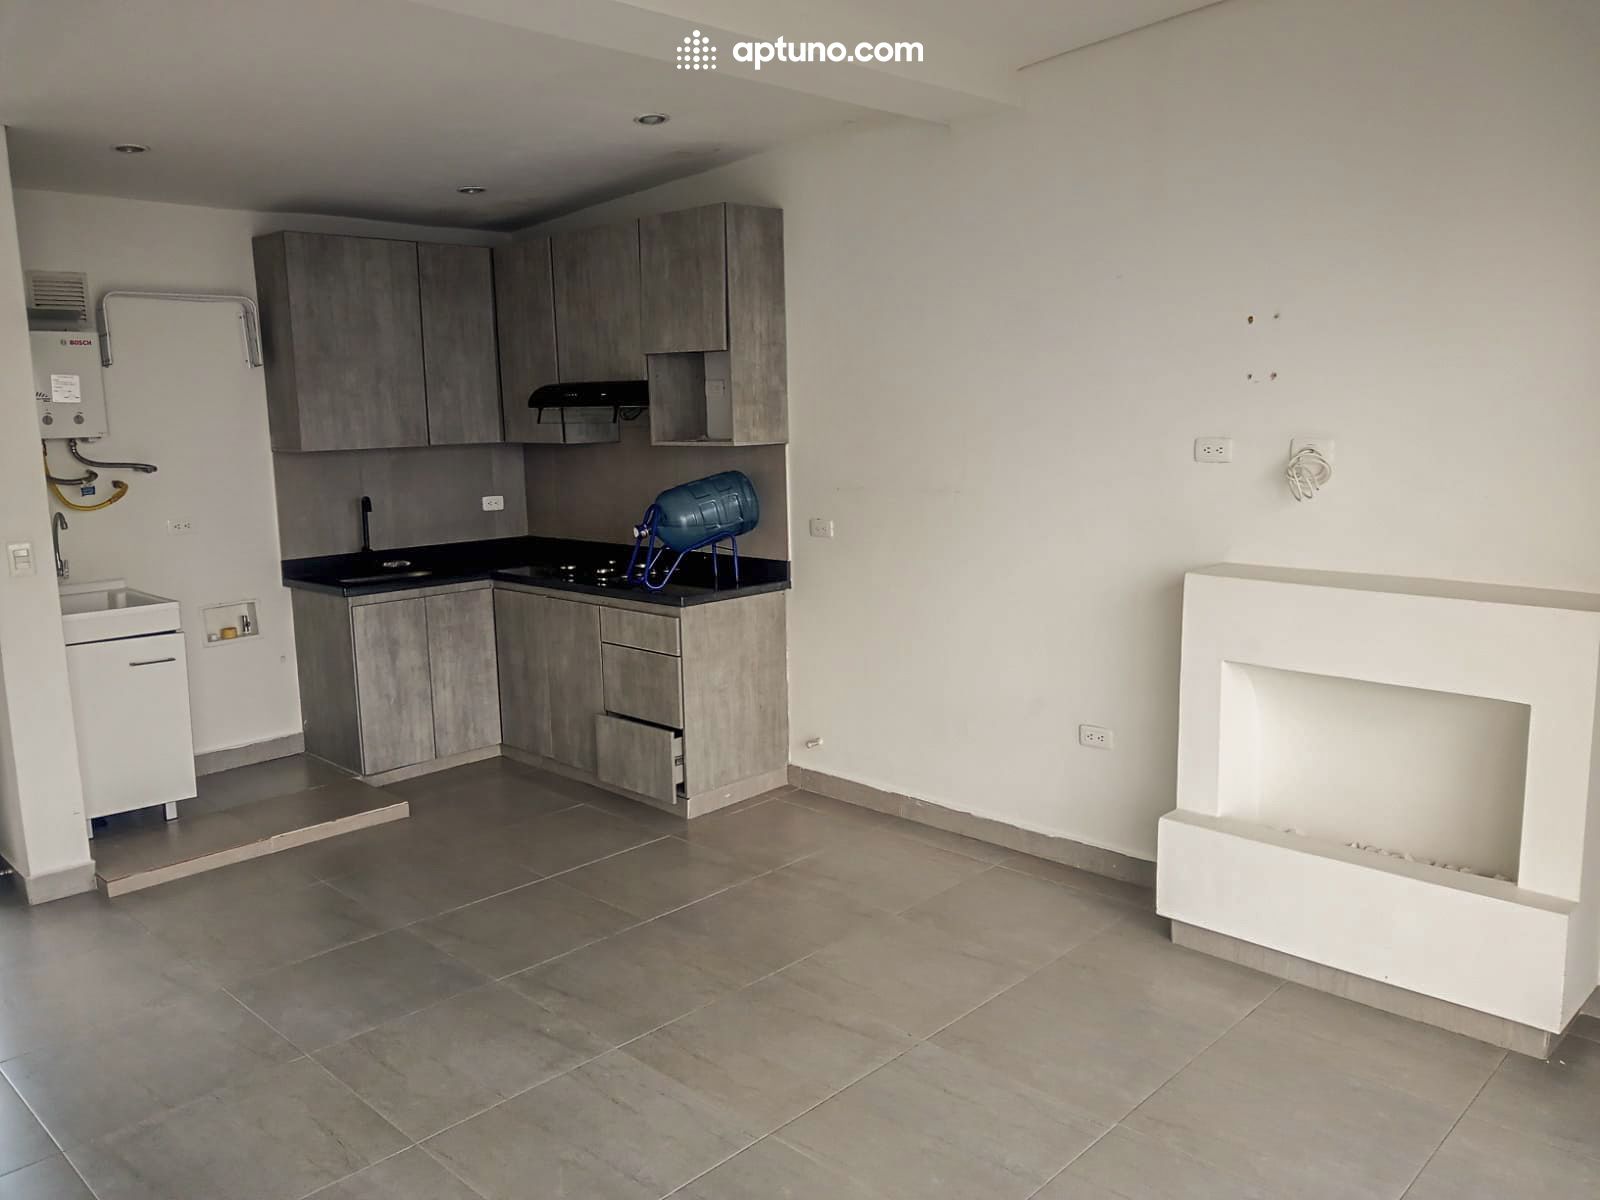 Apartamento en arriendo Altavista 85 m² - $ 1.400.000